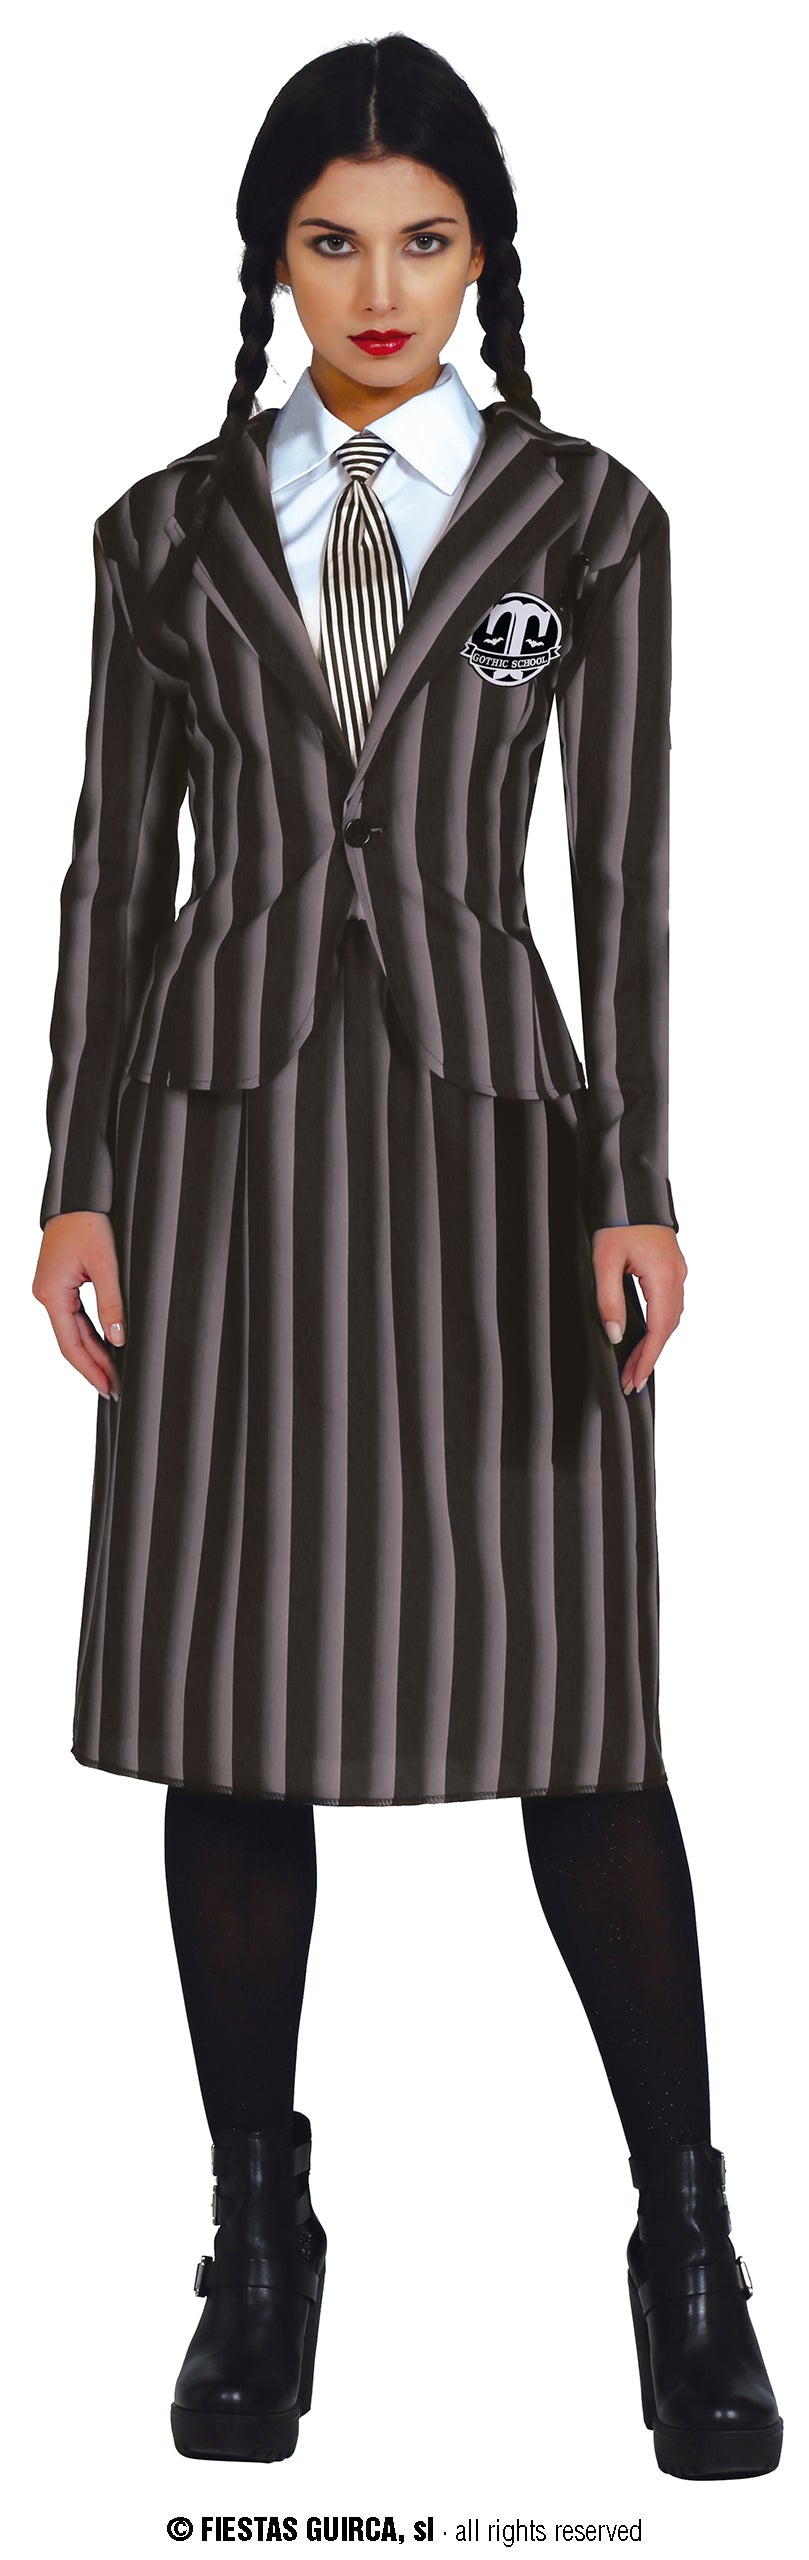 Gothic Student Uniform Woman